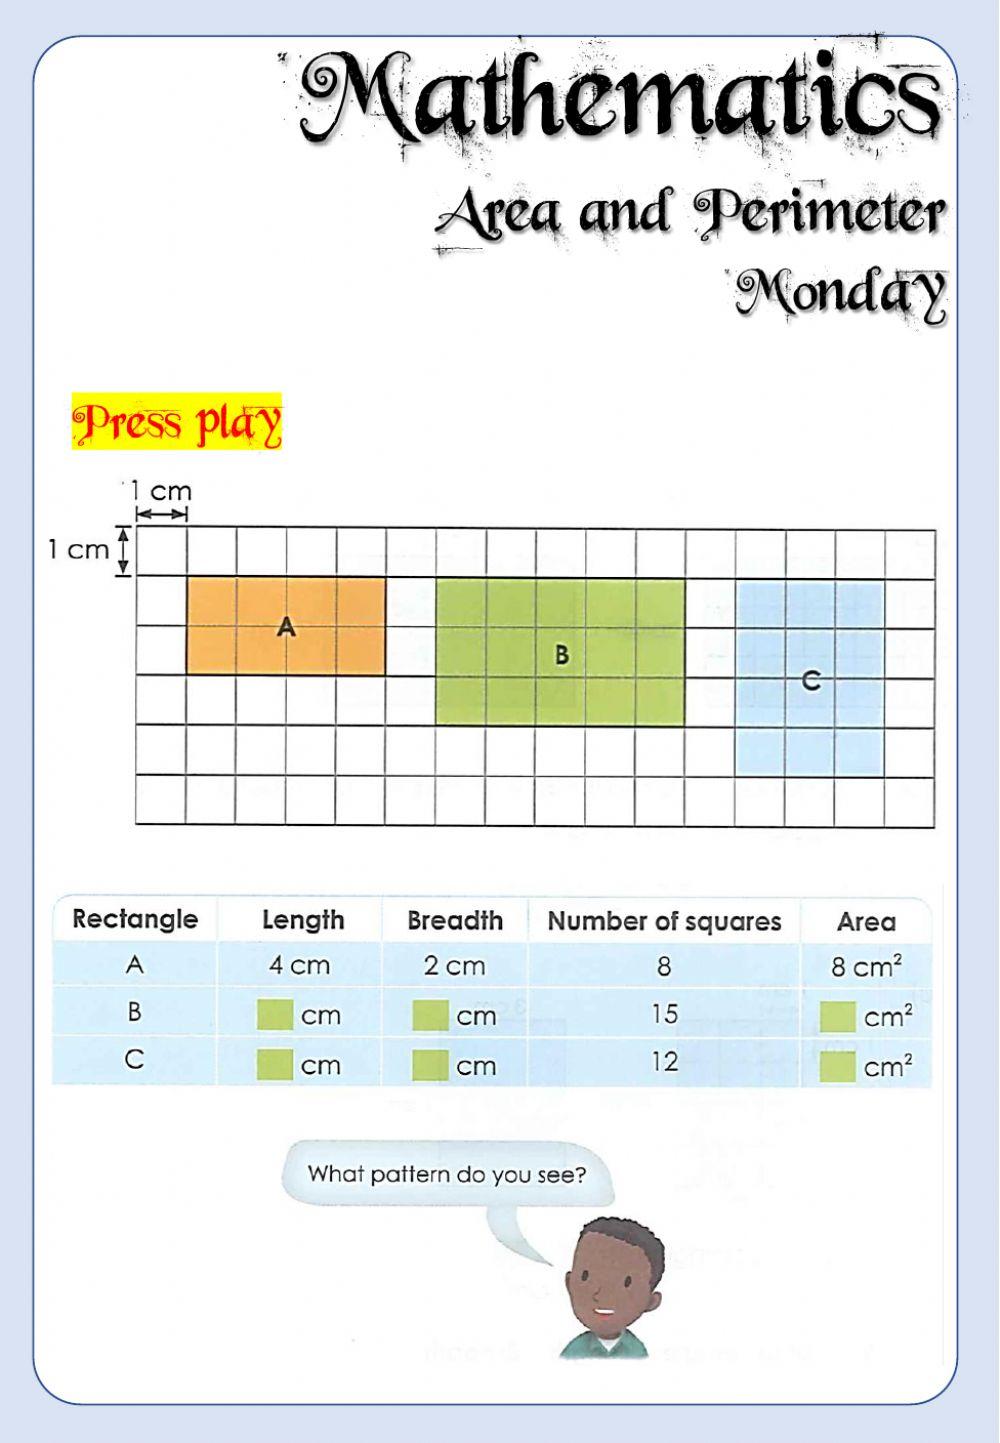 Week 20 - Monday - Math 6